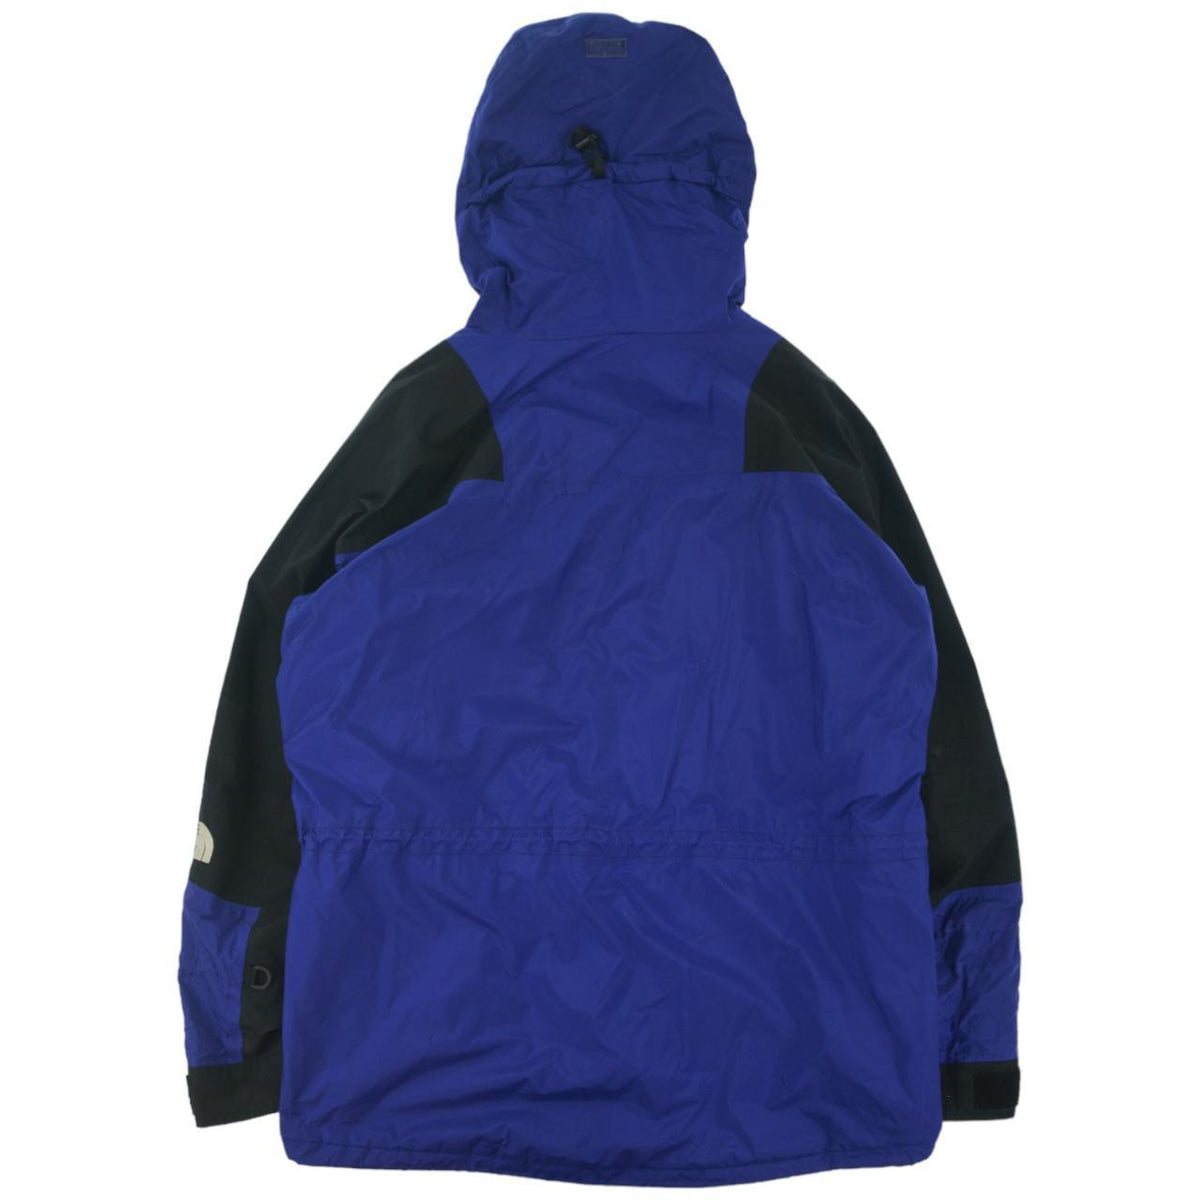 Vintage The North Face Goretex Jacket Size XL